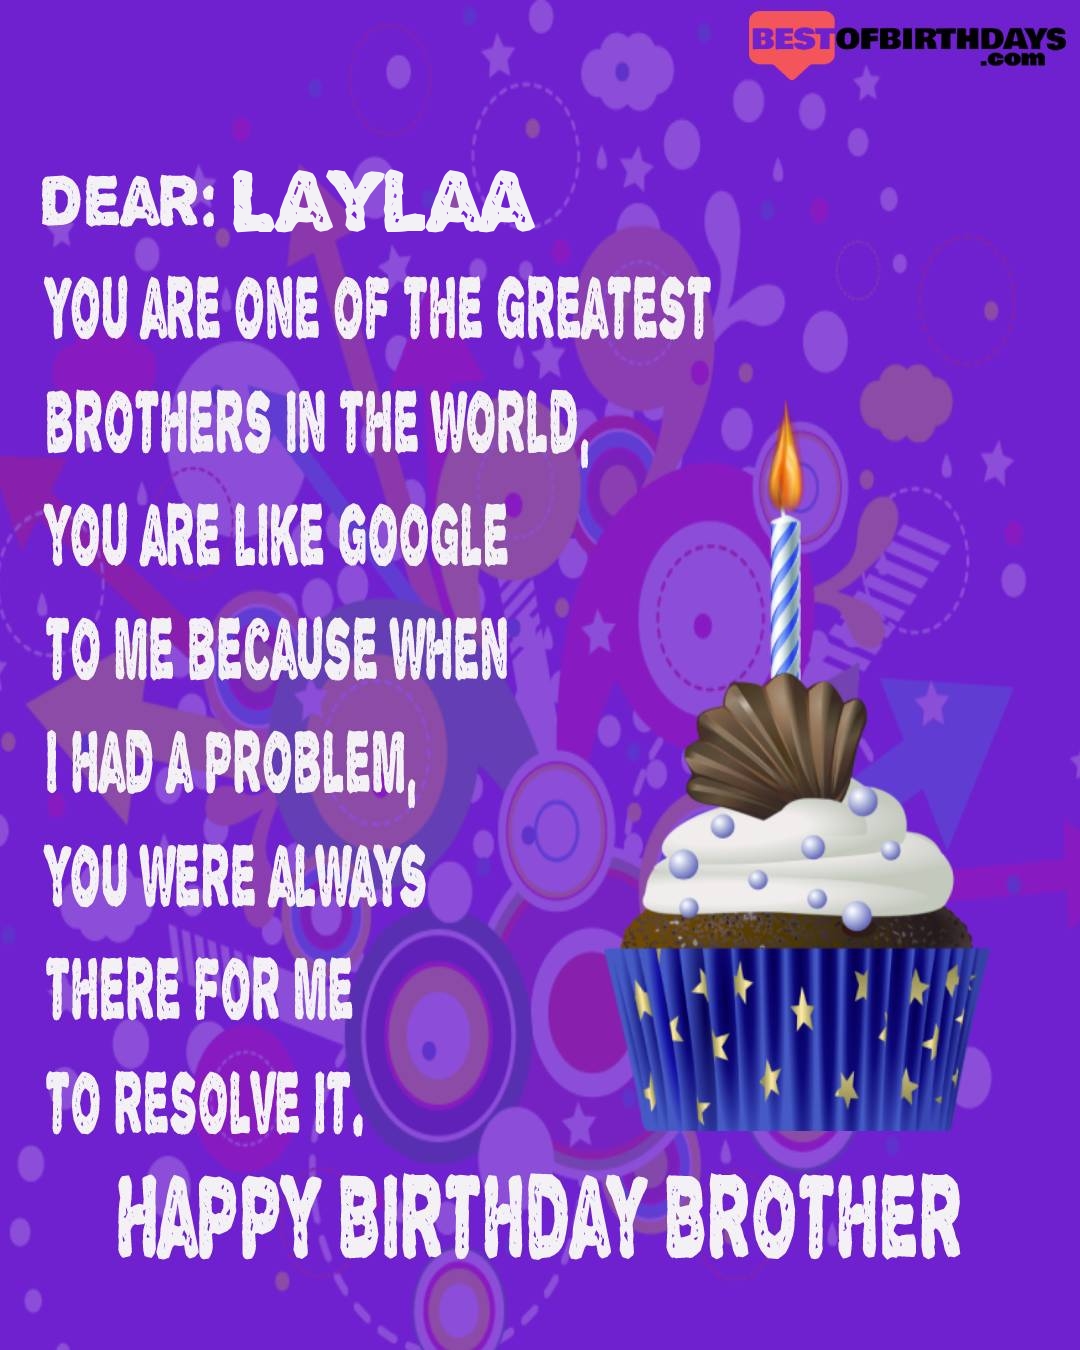 Happy birthday laylaa bhai brother bro